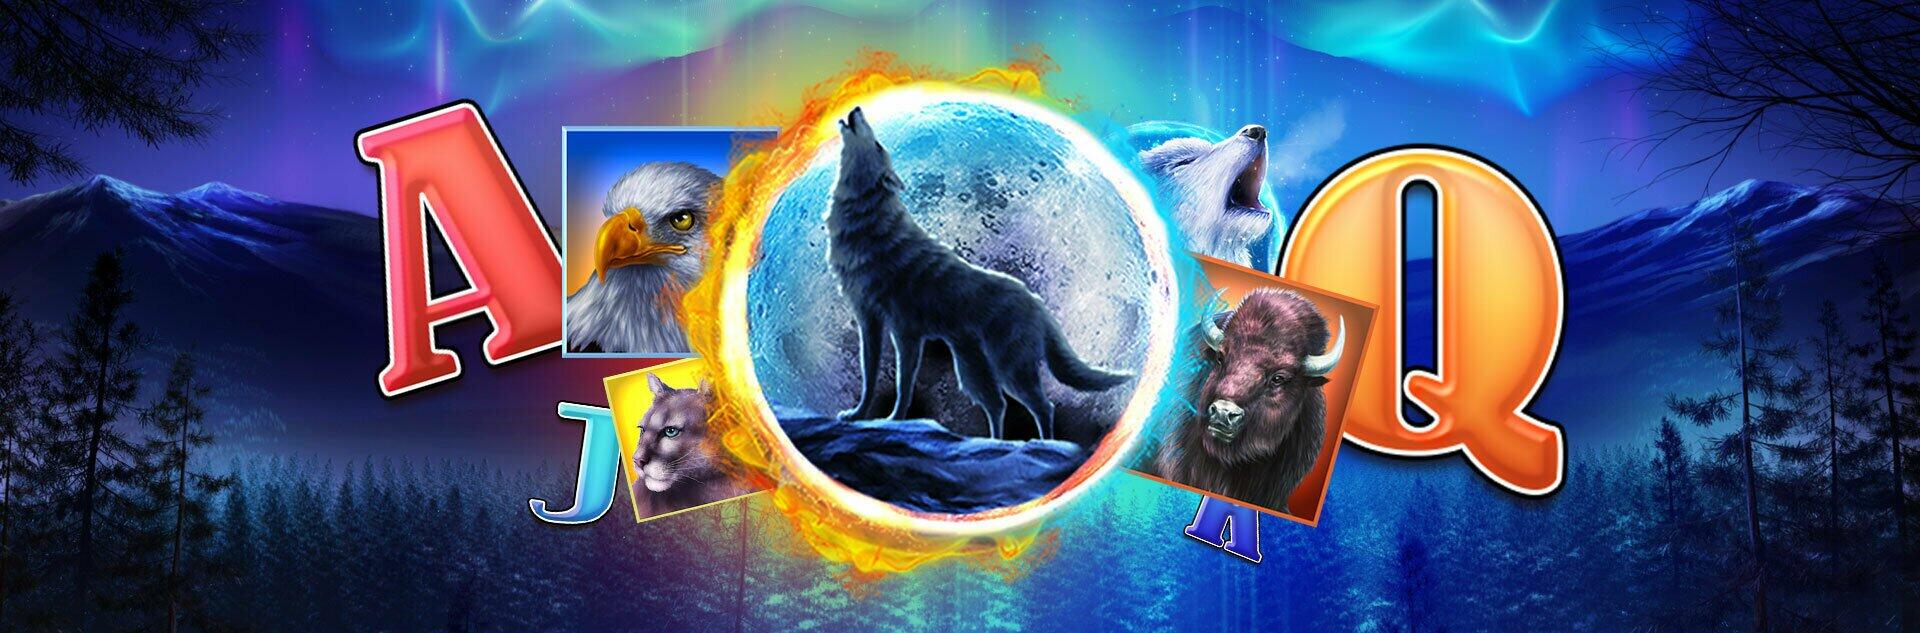 Wolf Moon Rising Slot